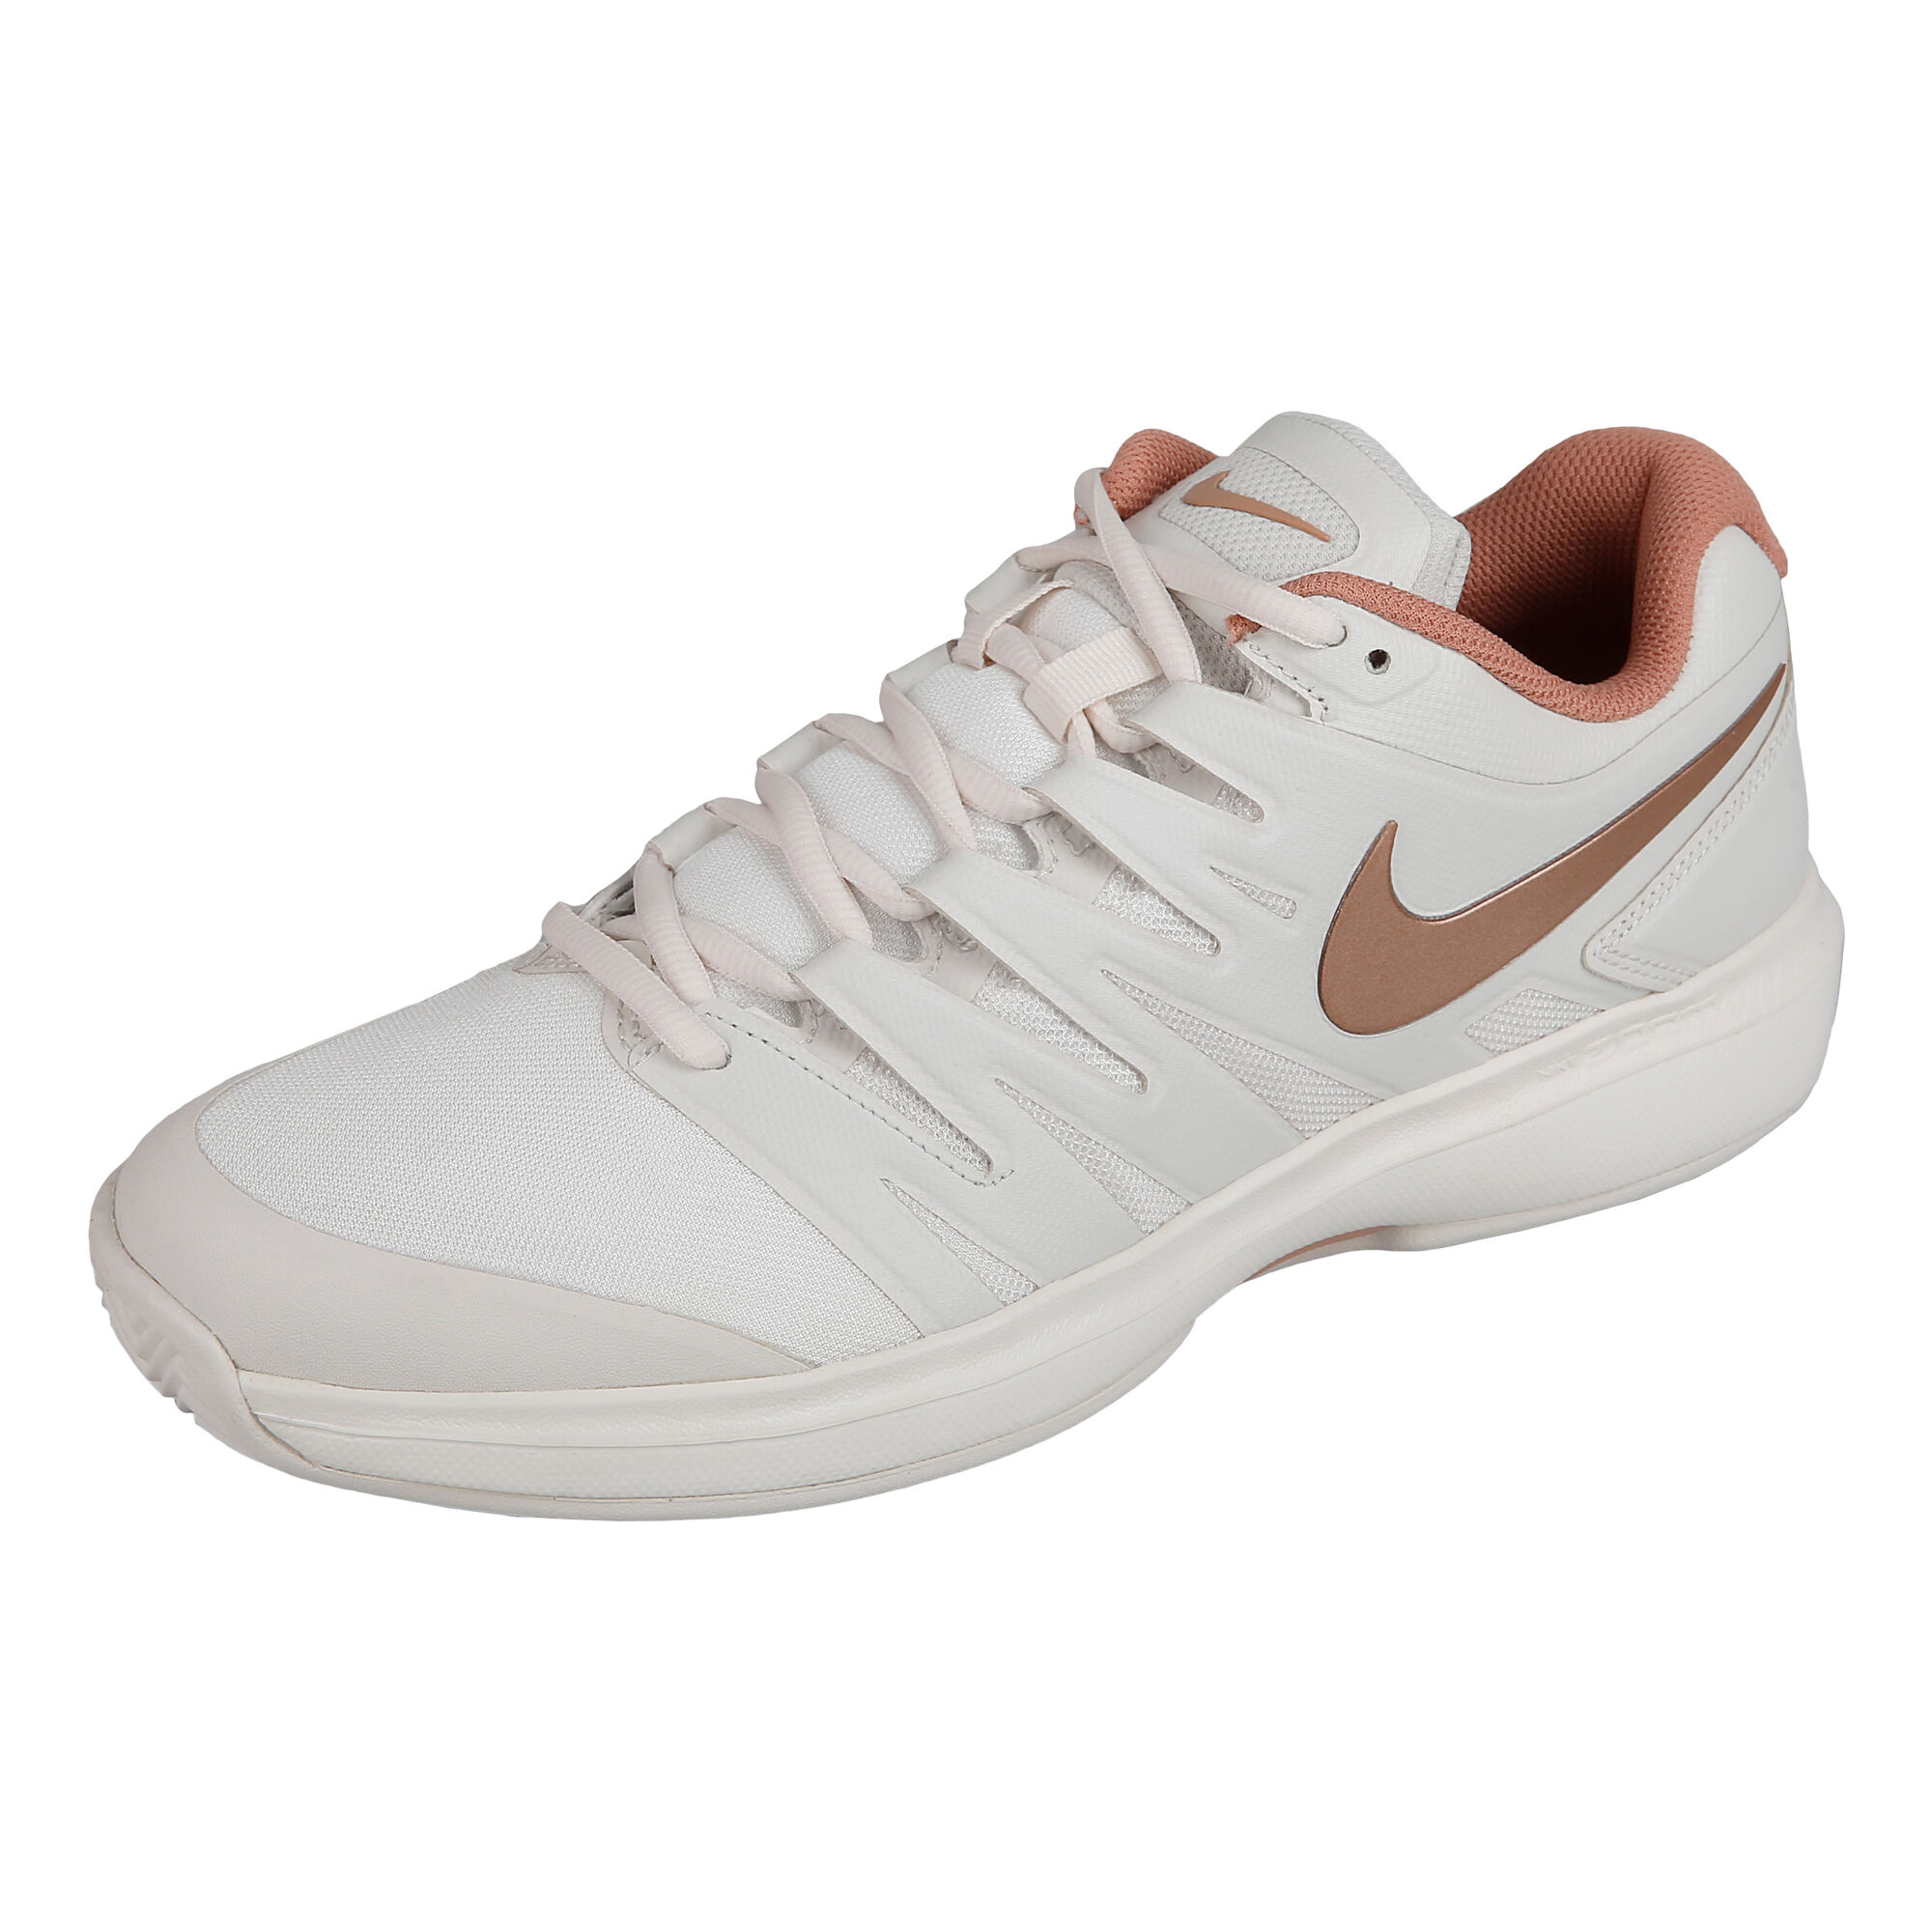 Pets Revival Voyage buy Nike Air Zoom Prestige Clay Court Shoe Women - Cream, Ecru online |  Tennis-Point